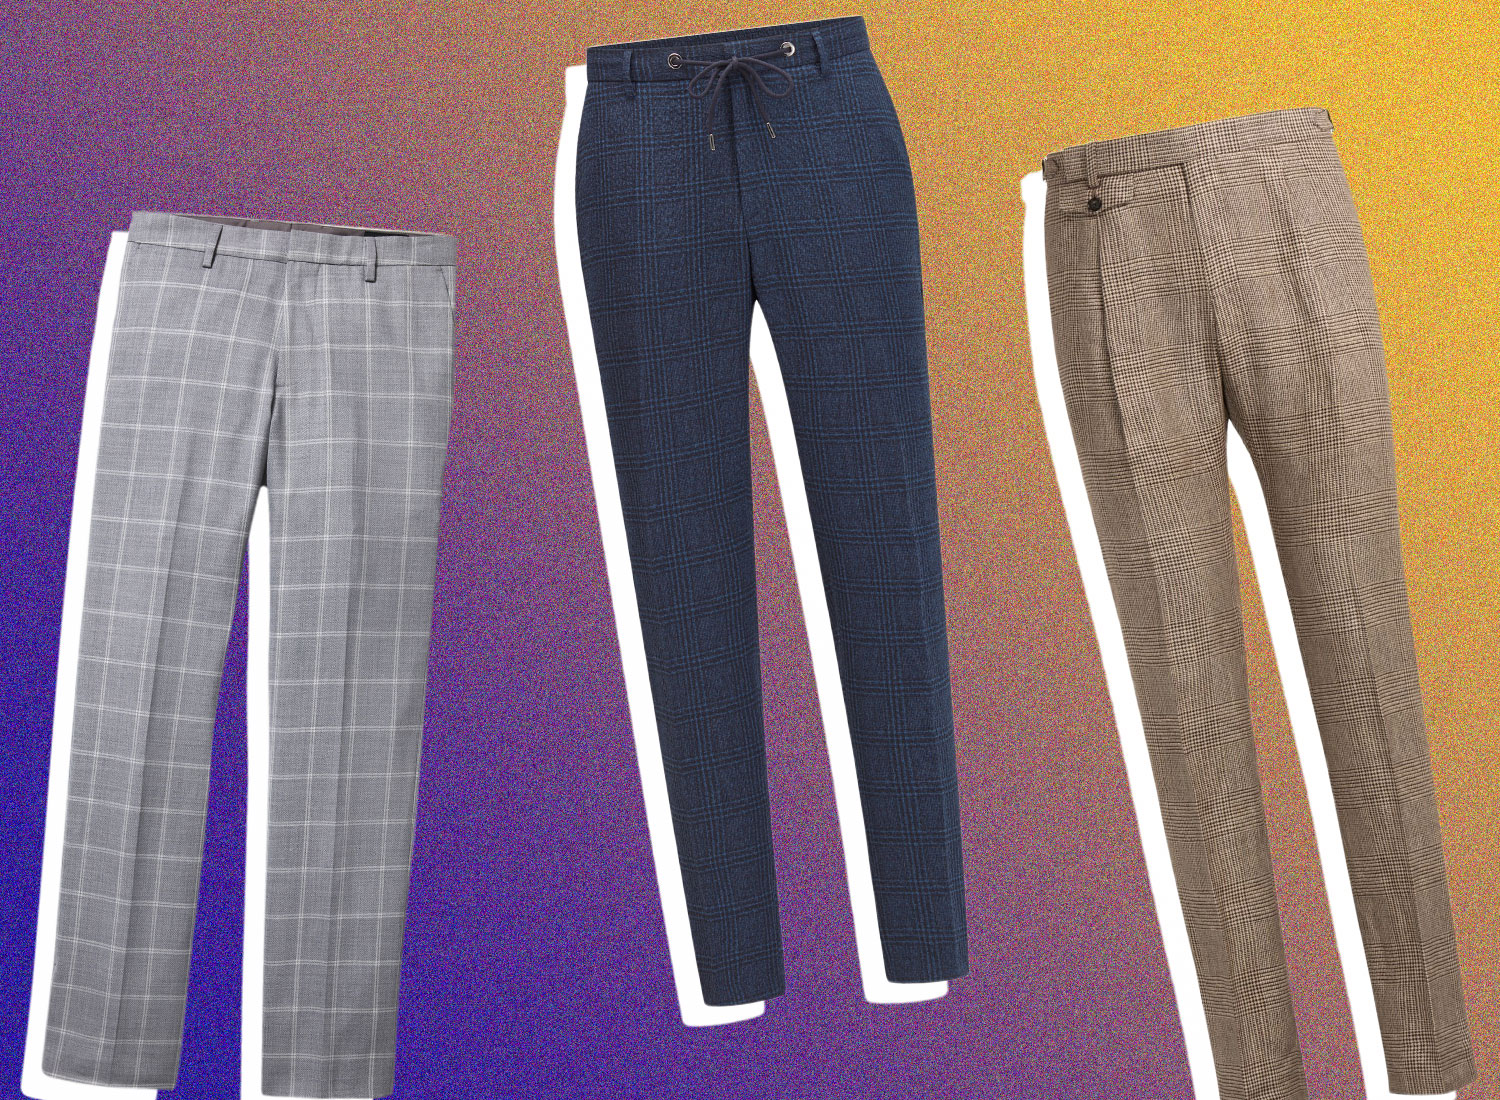 15 Best Plaid & Check Pants For Daring Gentlemen